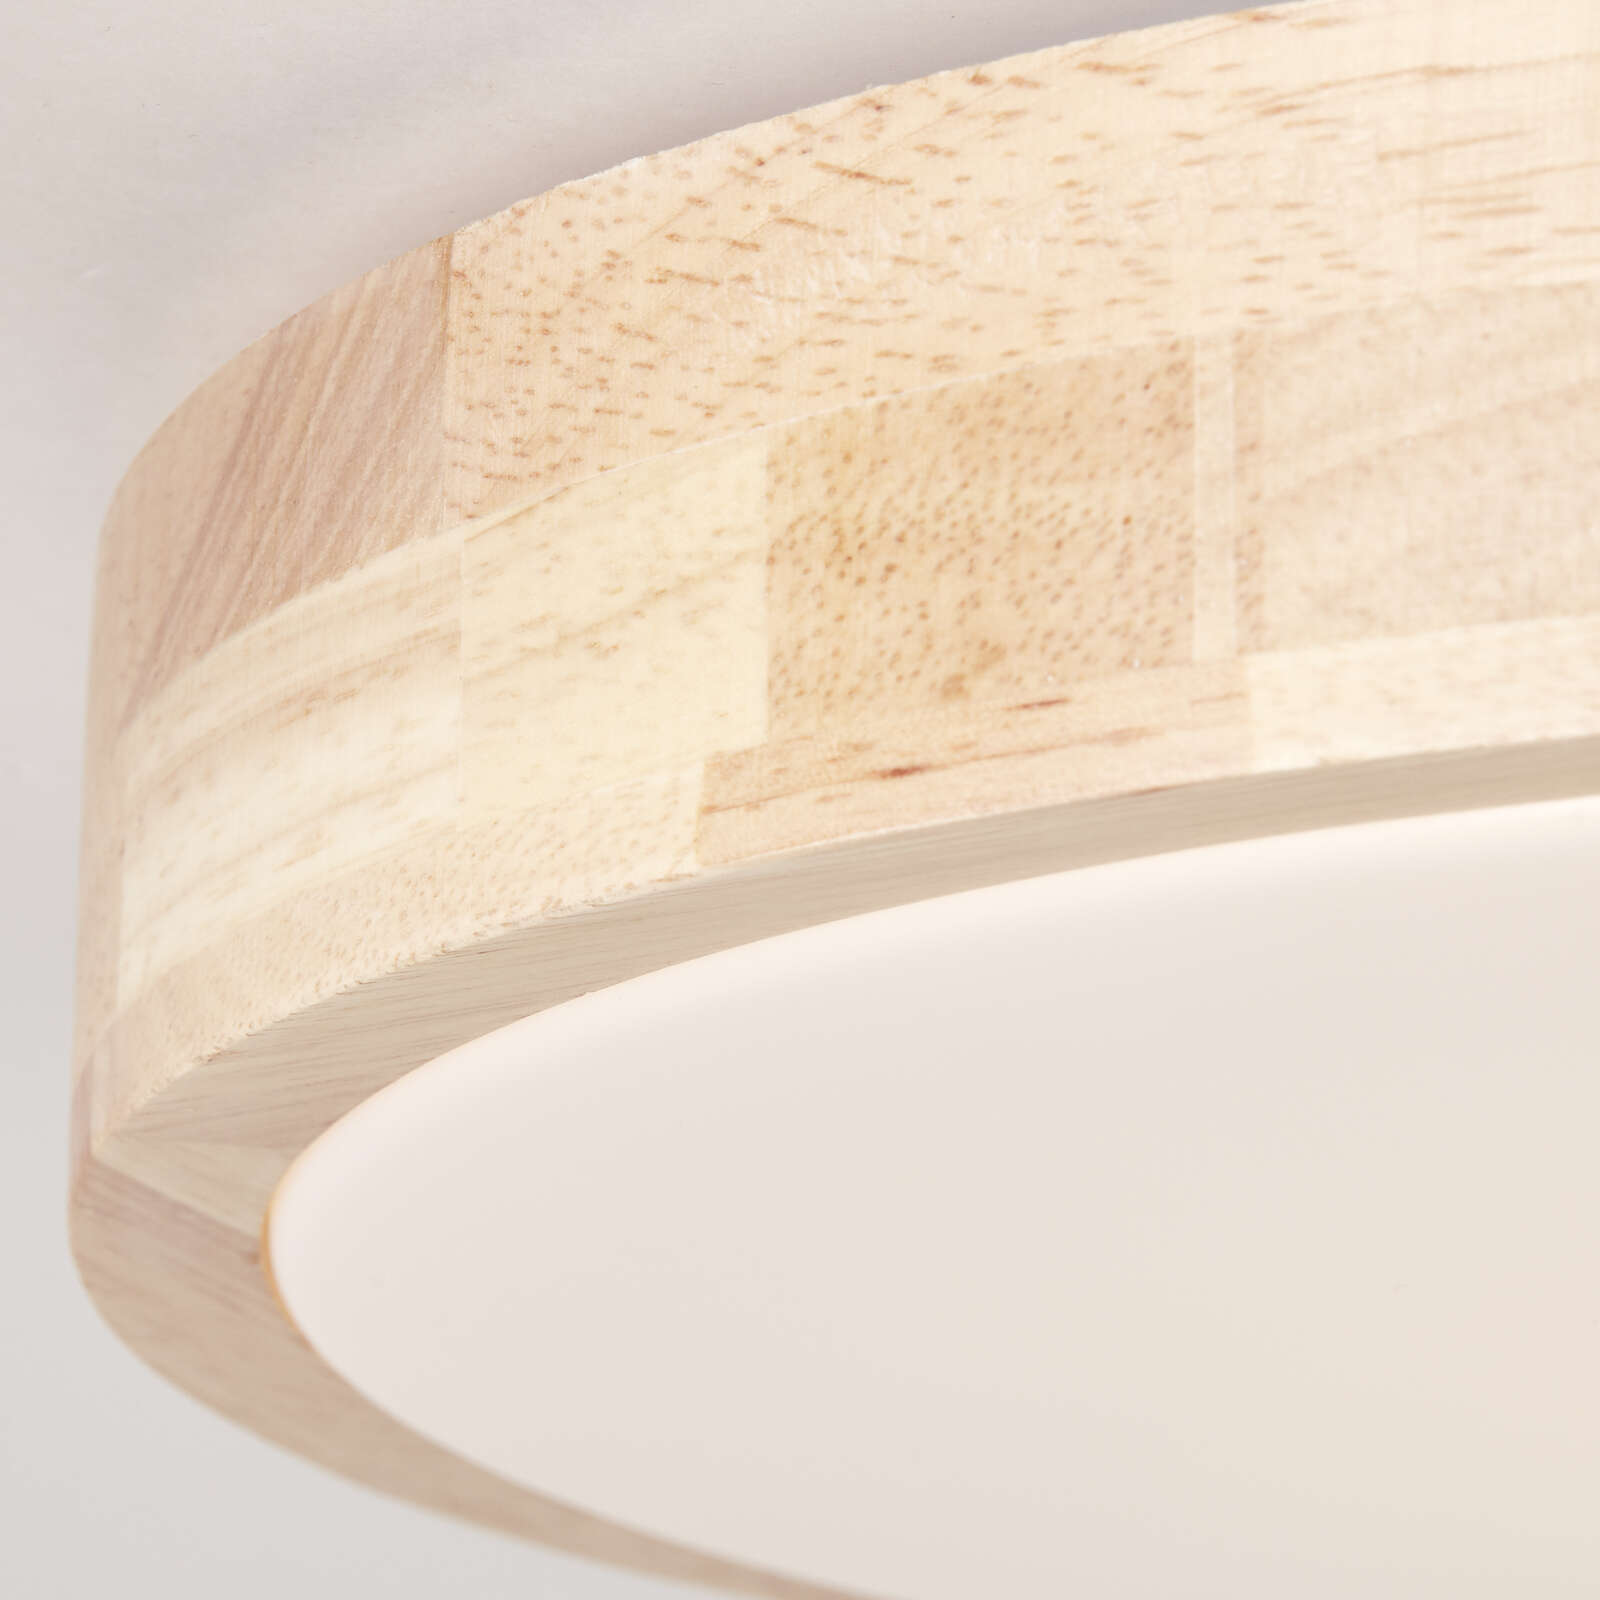             Wooden ceiling light - Liv - Brown
        